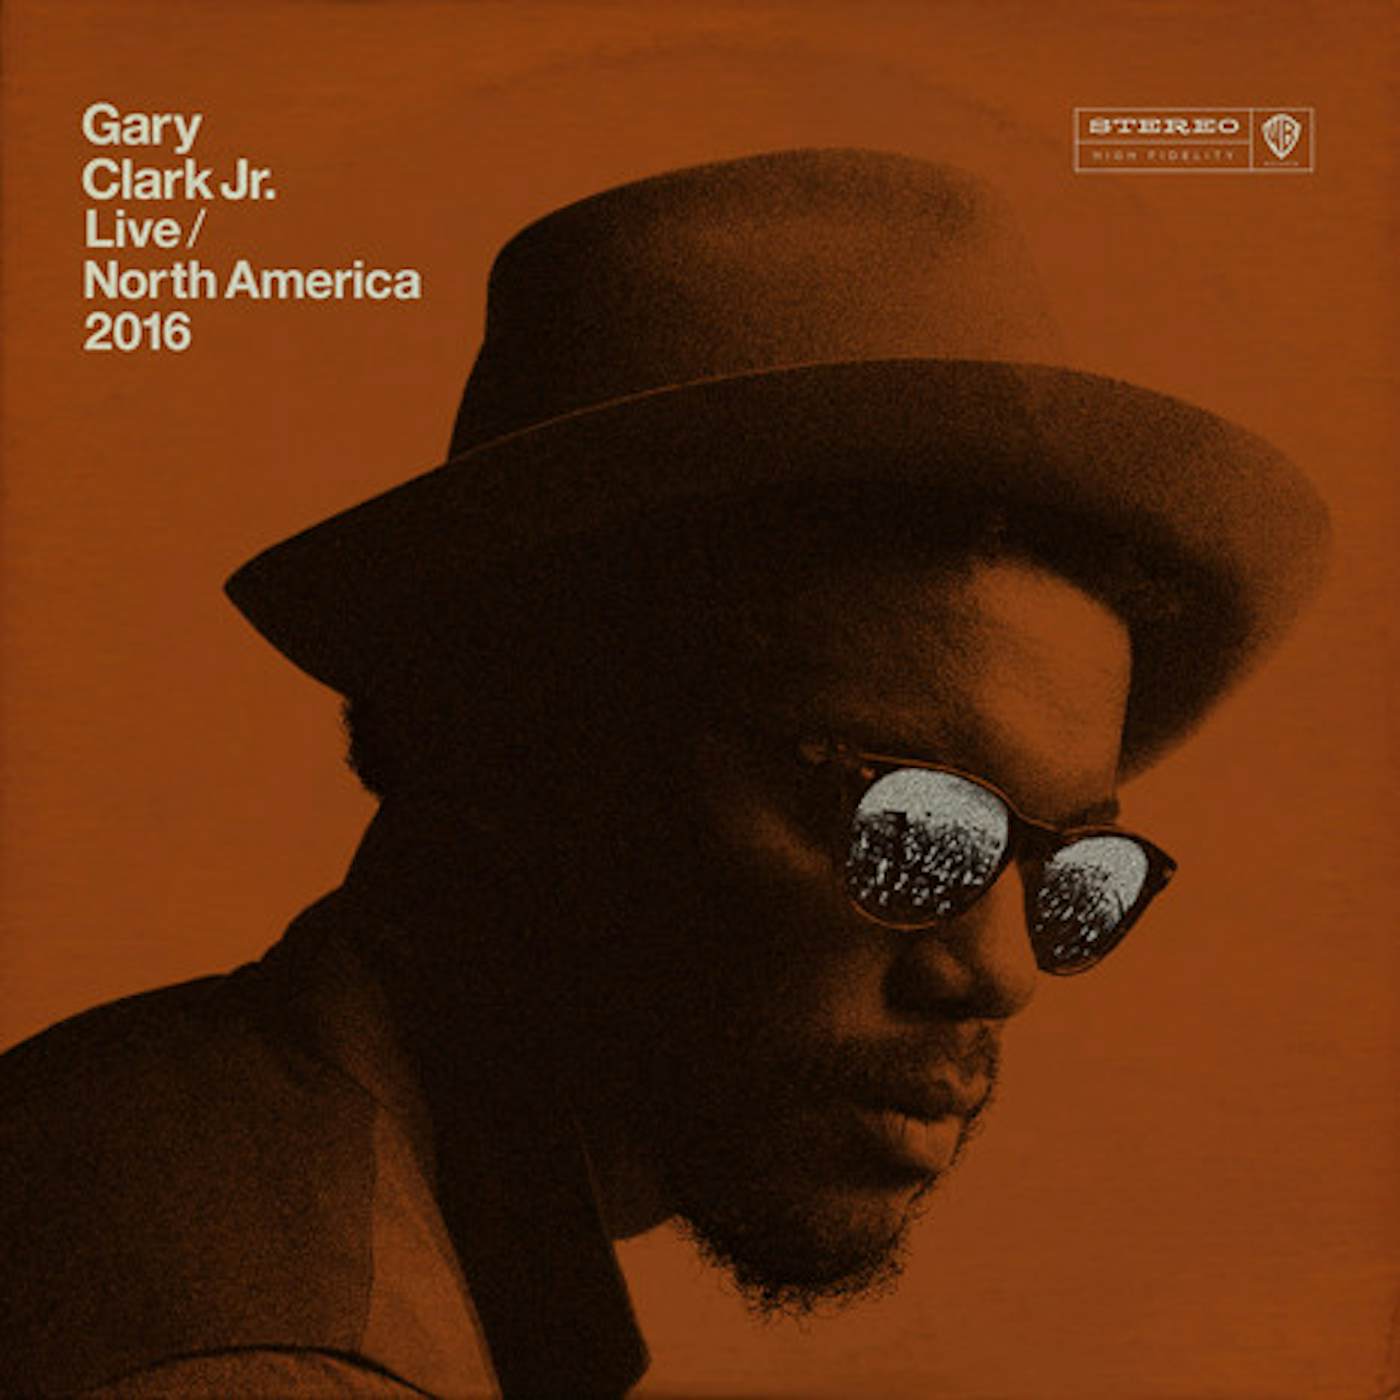 Gary Clark Jr. Live North America 2016 Vinyl Record